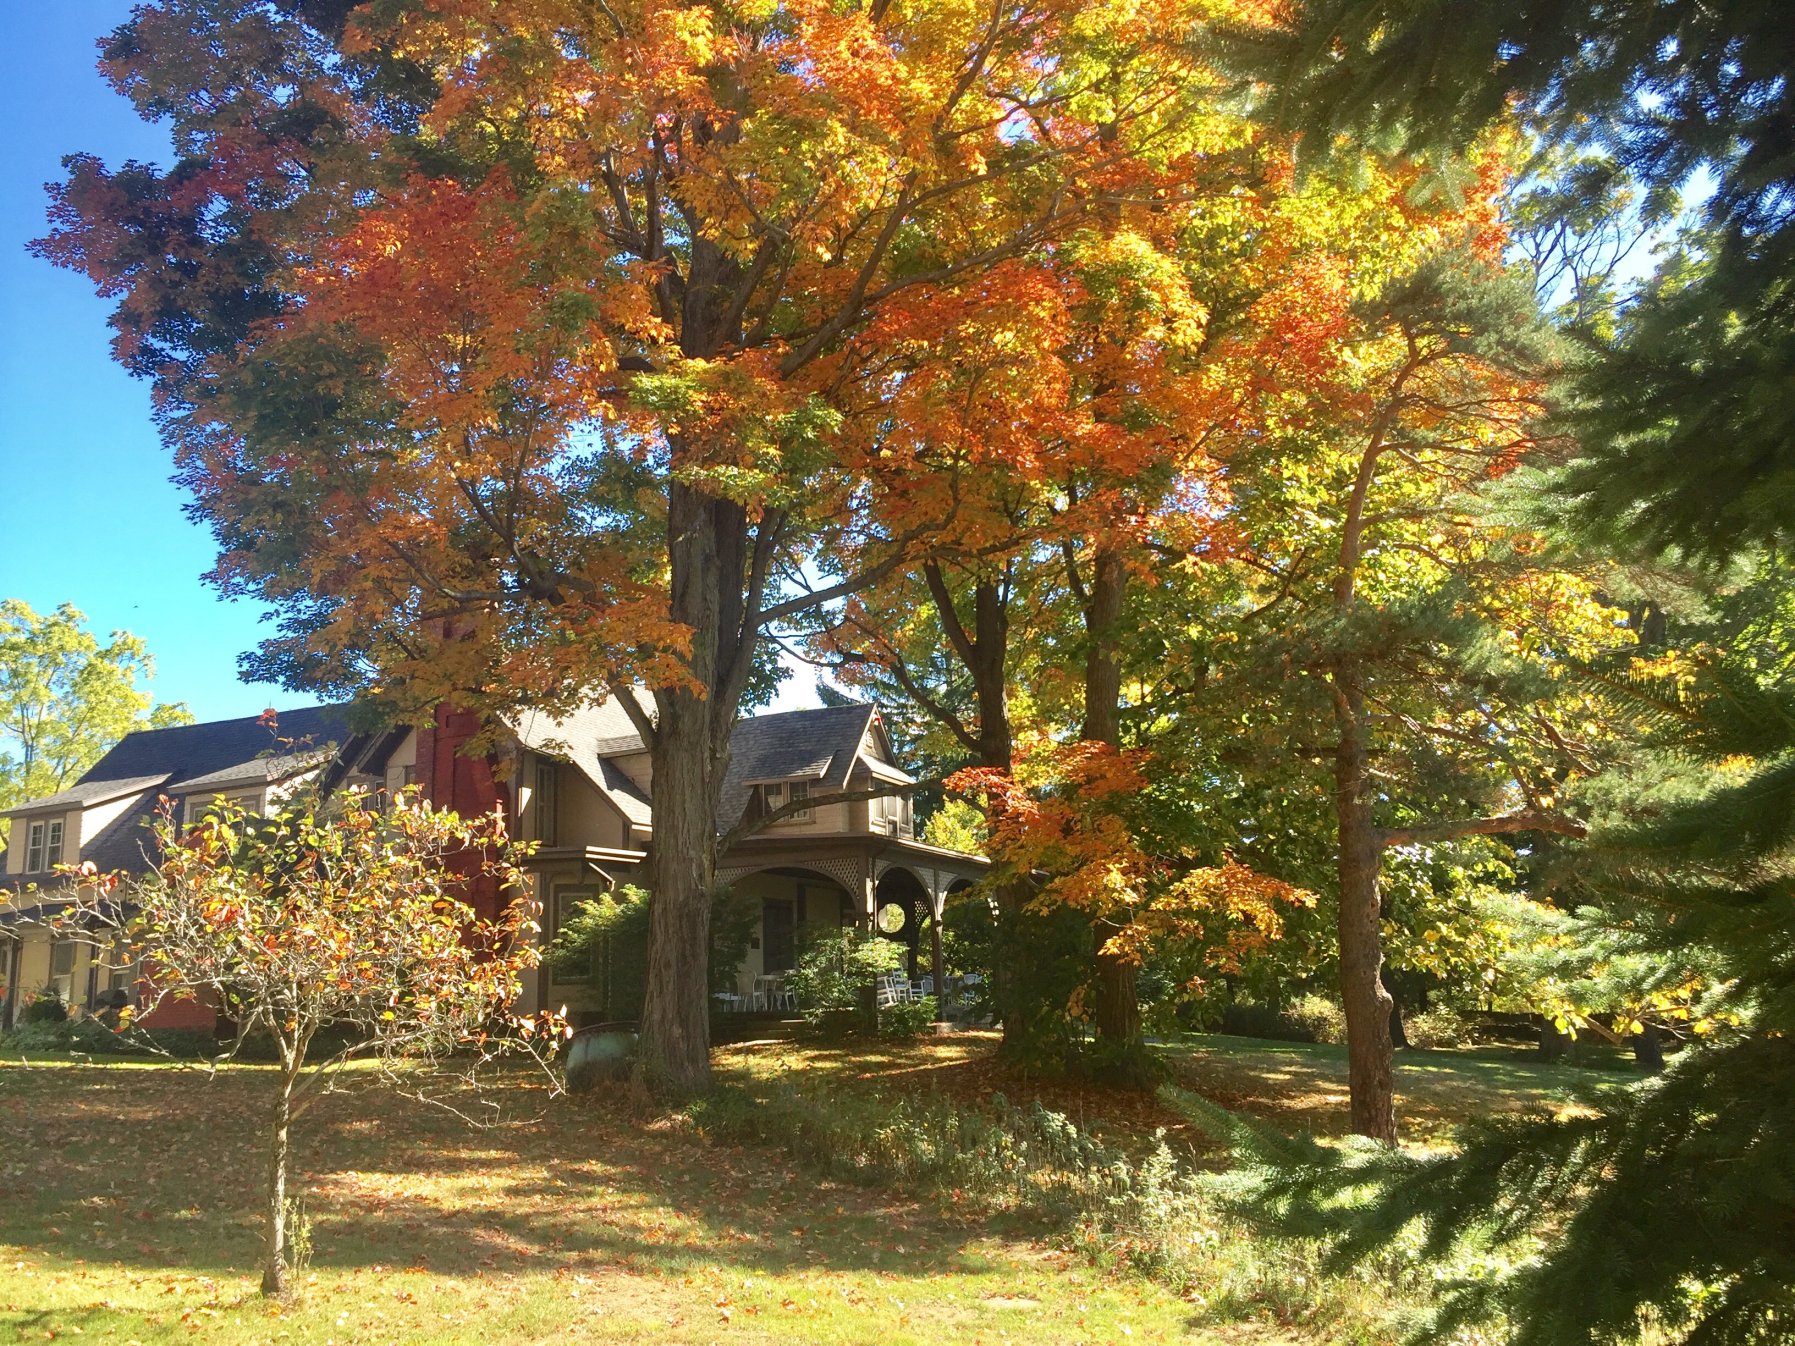 The farmhouse amid brilliant autumn colors